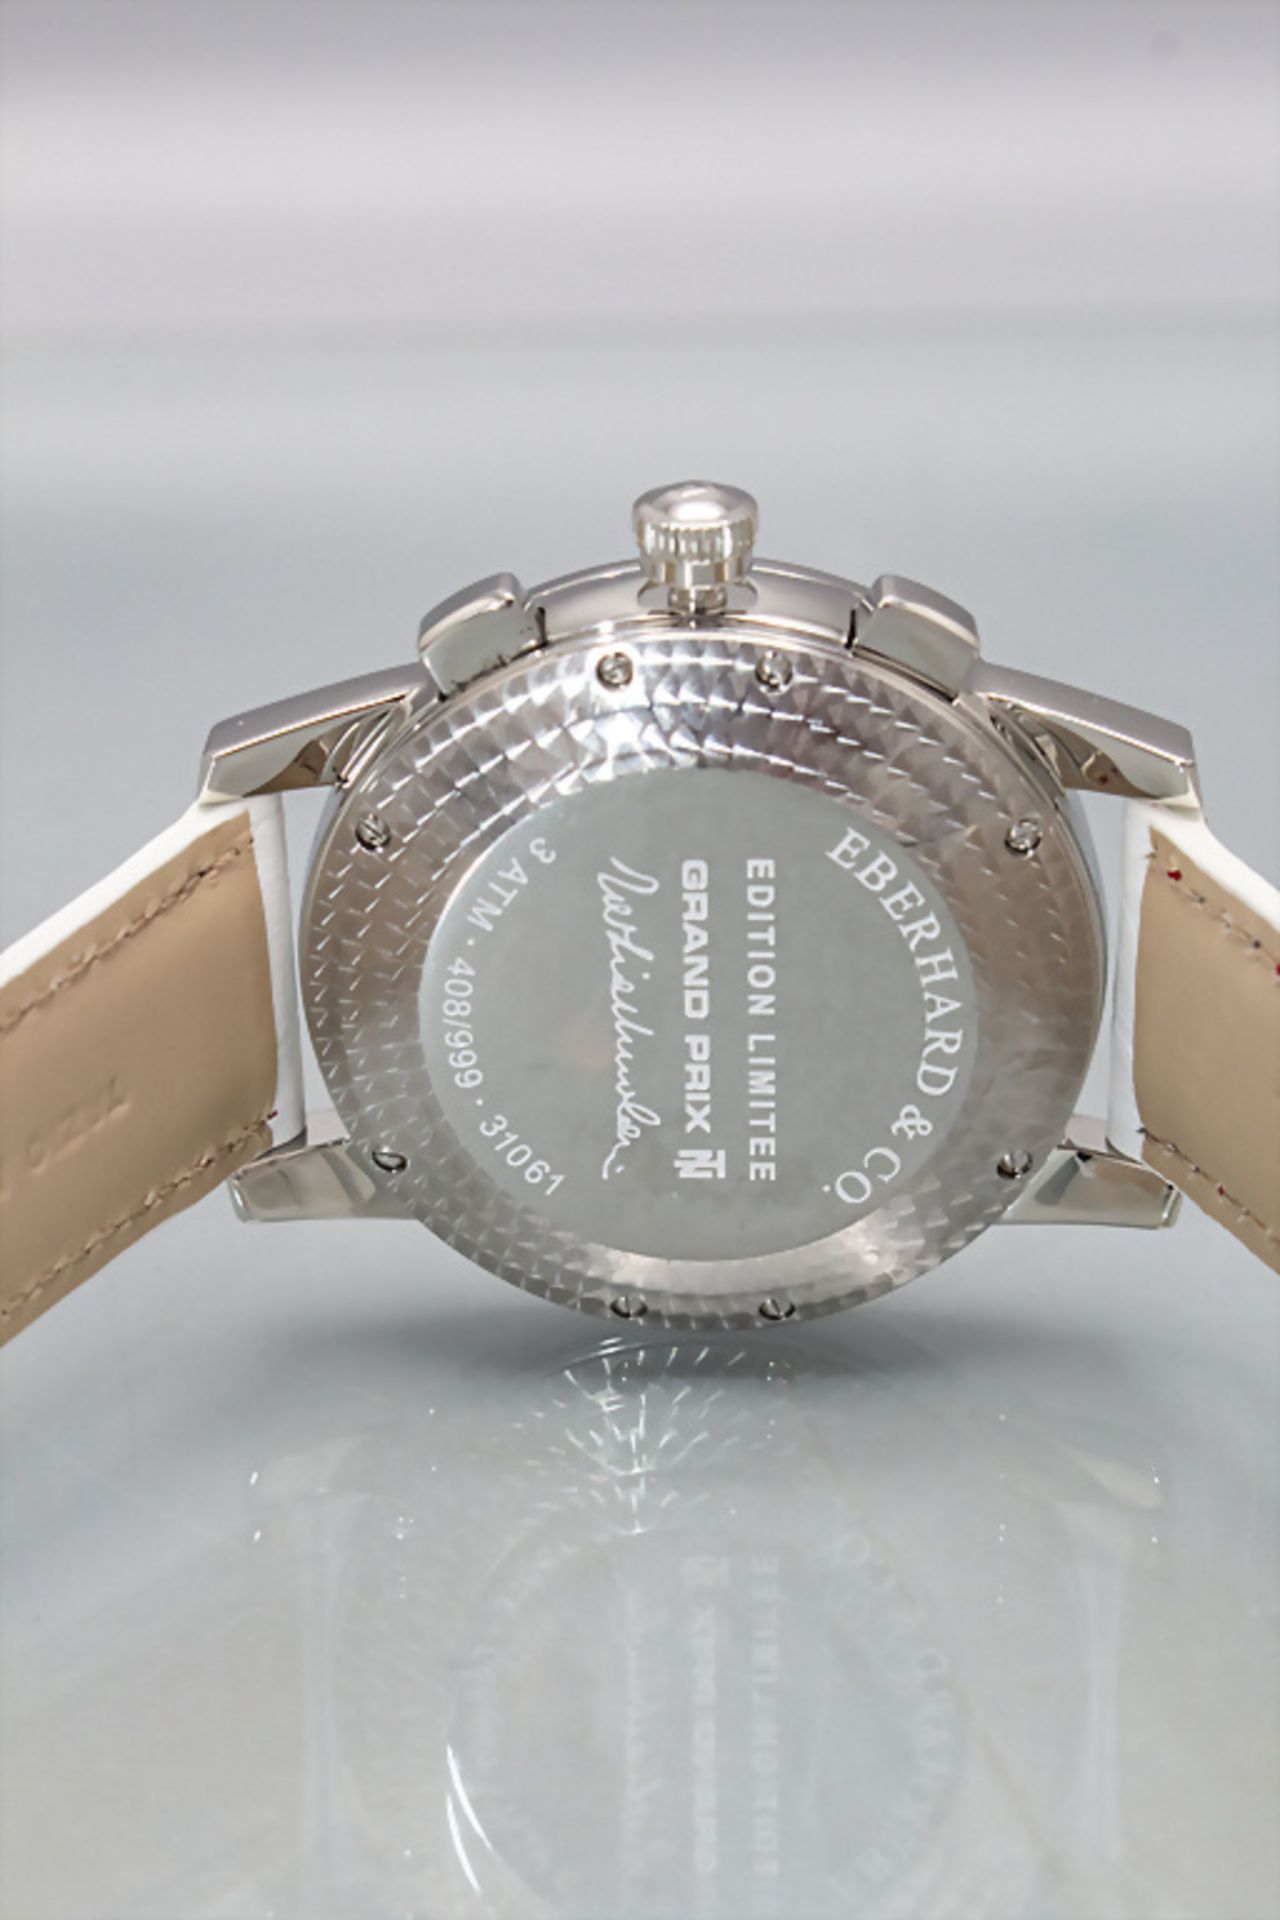 Eberhard & Co., Tazio Nuvolari, Limited Edition Chronograph, Schweiz / Swiss, 2021 - Image 3 of 5